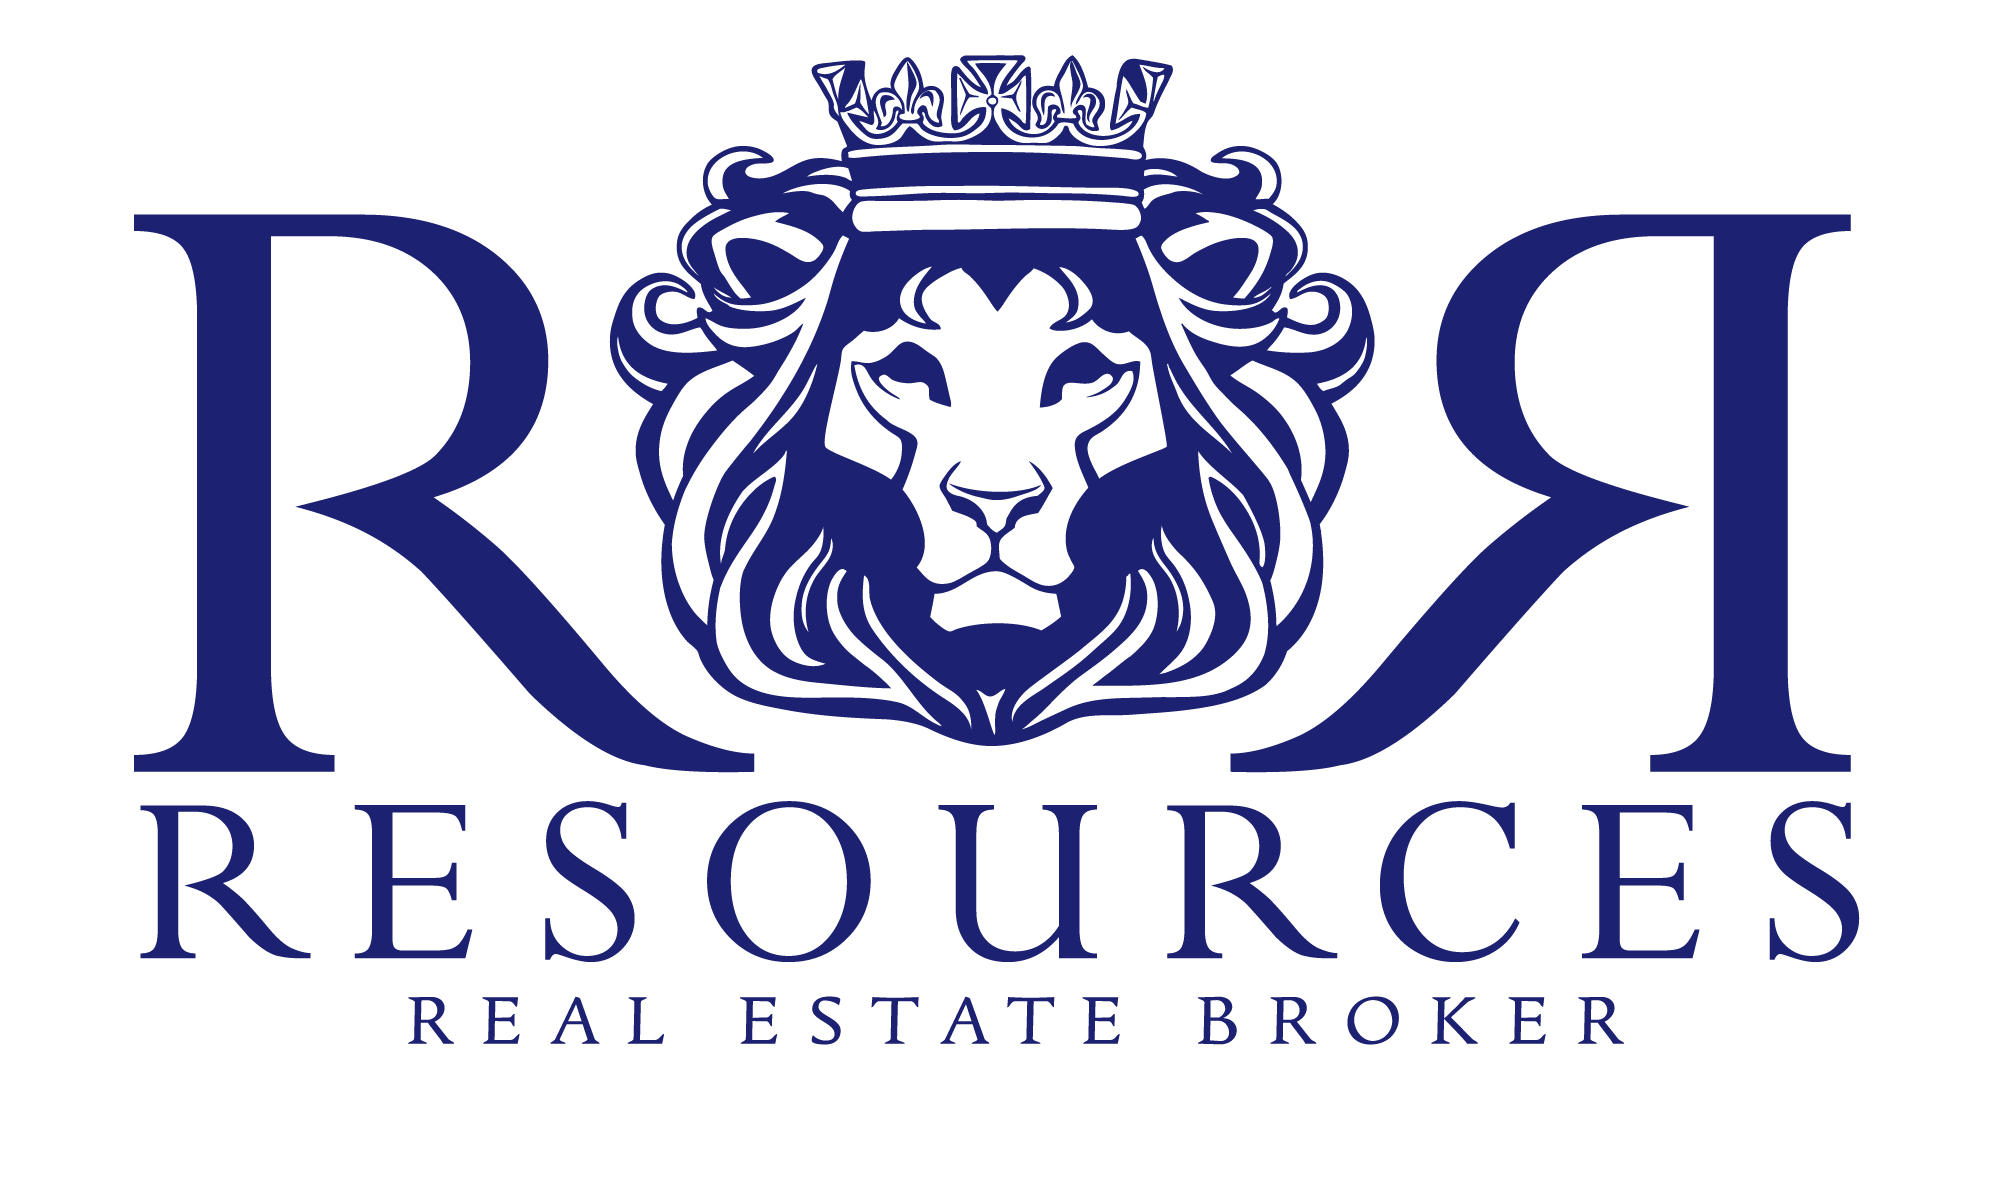 Resources Real Estate logo